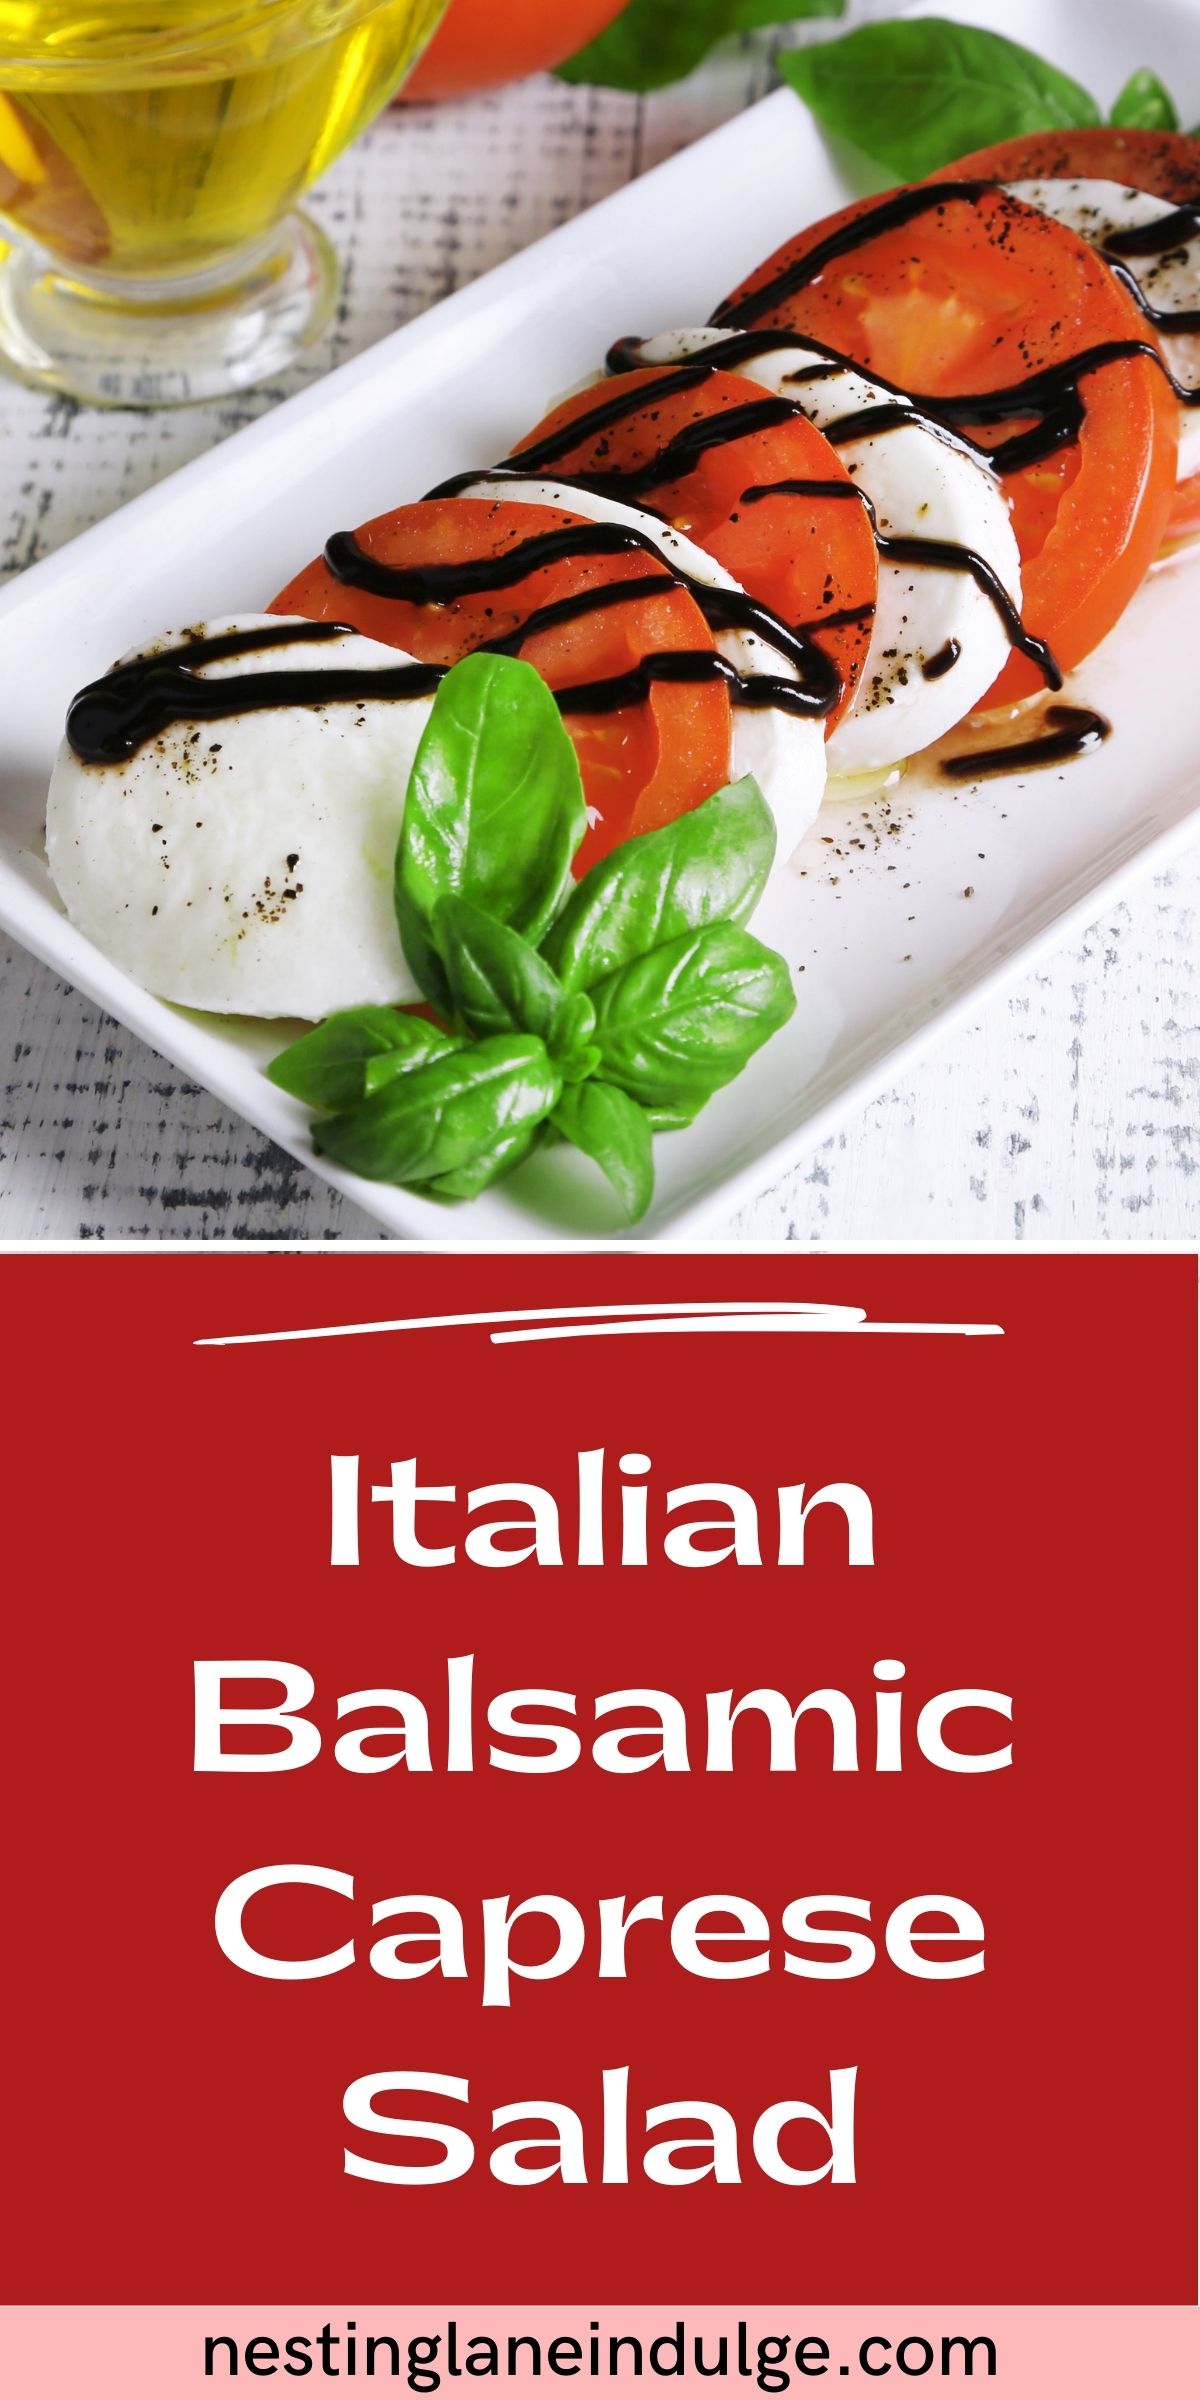 Graphic for Pinterest of Italian Balsamic Caprese Salad Recipe.